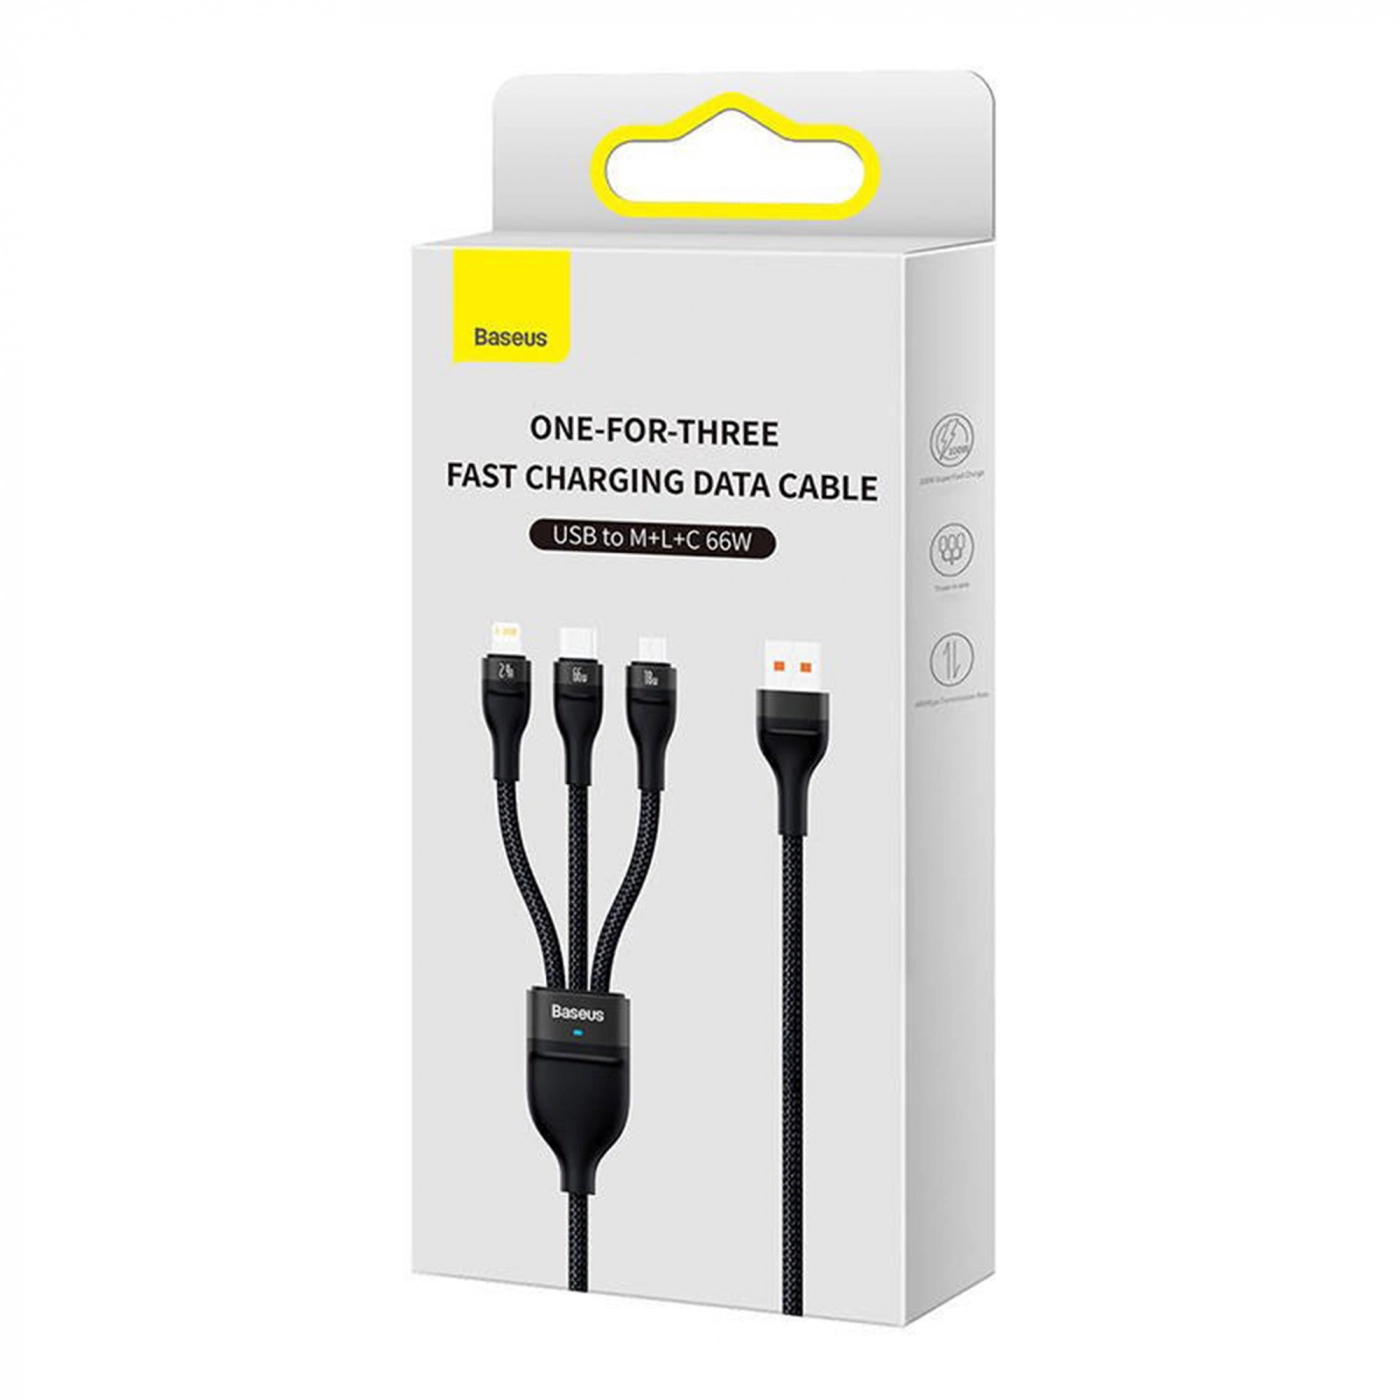 Купить Кабель Baseus Flash Series One-for-three Fast Charging Data Cable USB to M+L+C 66W 1.2m Black - фото 4